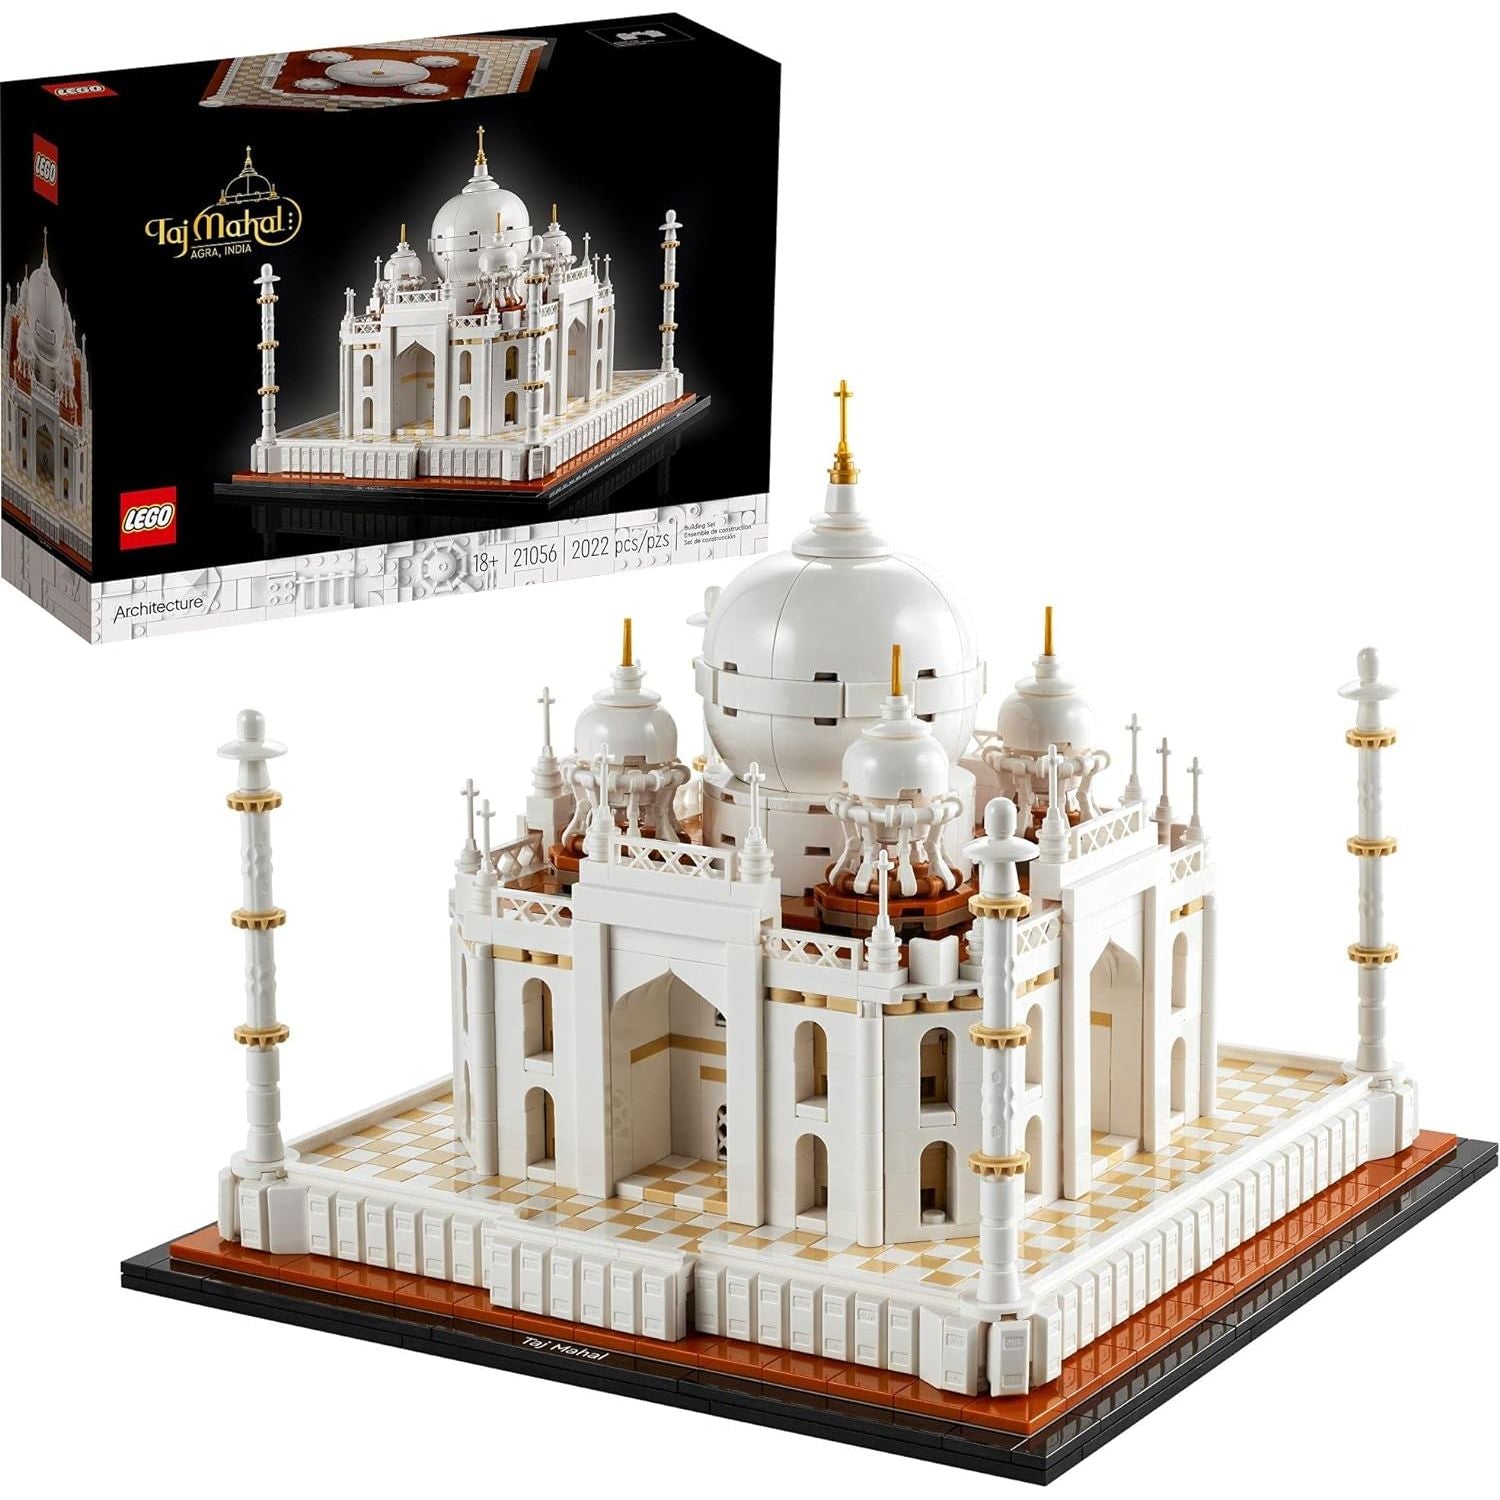 LEGO Architecture Taj Mahal 21056 Building Set - Landmarks Collection